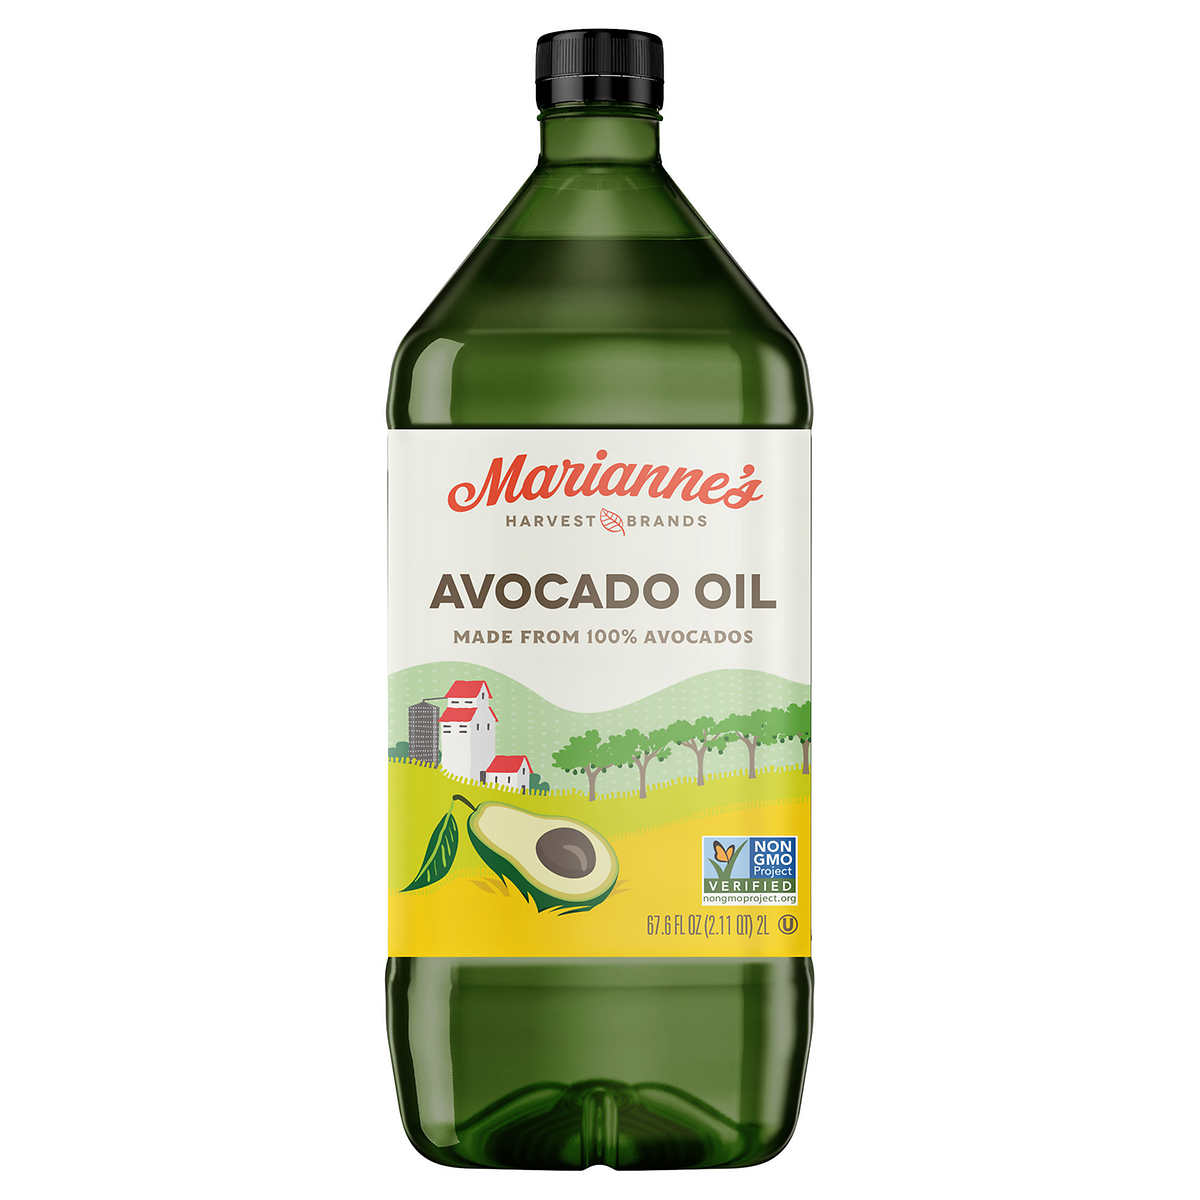 Marianne's Avocado Oil